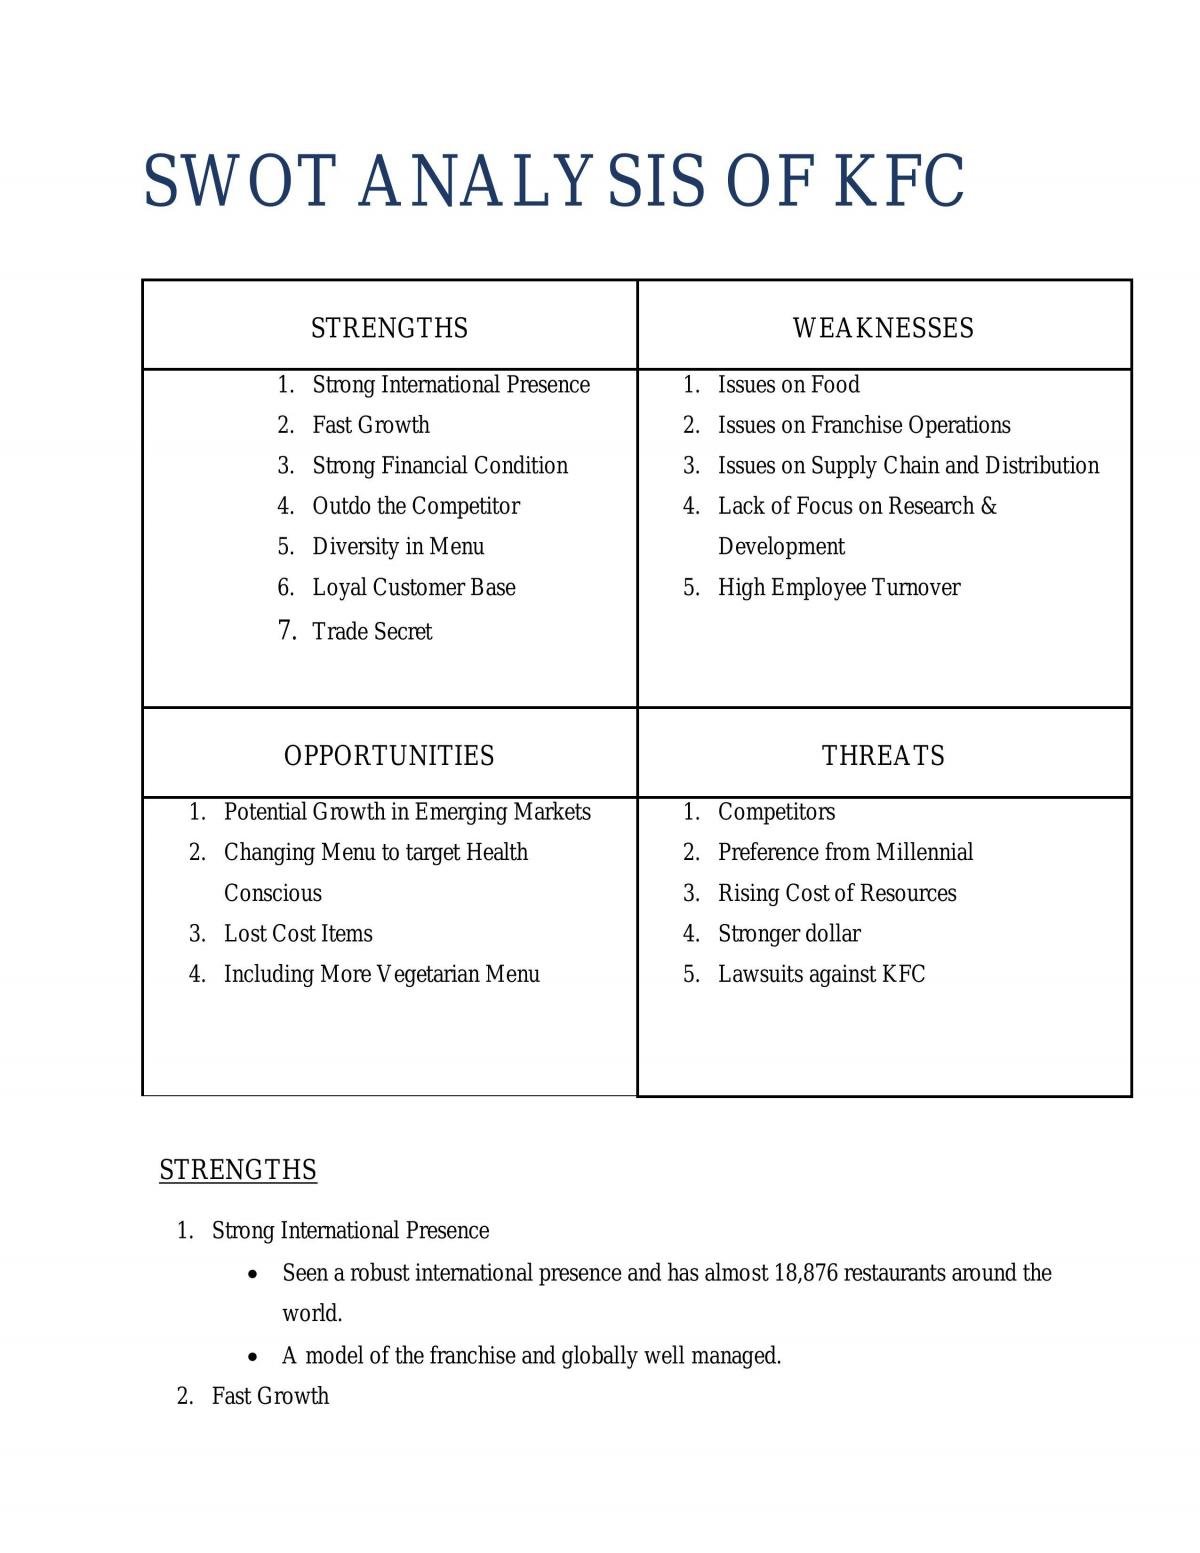 swot analysis kfc case study